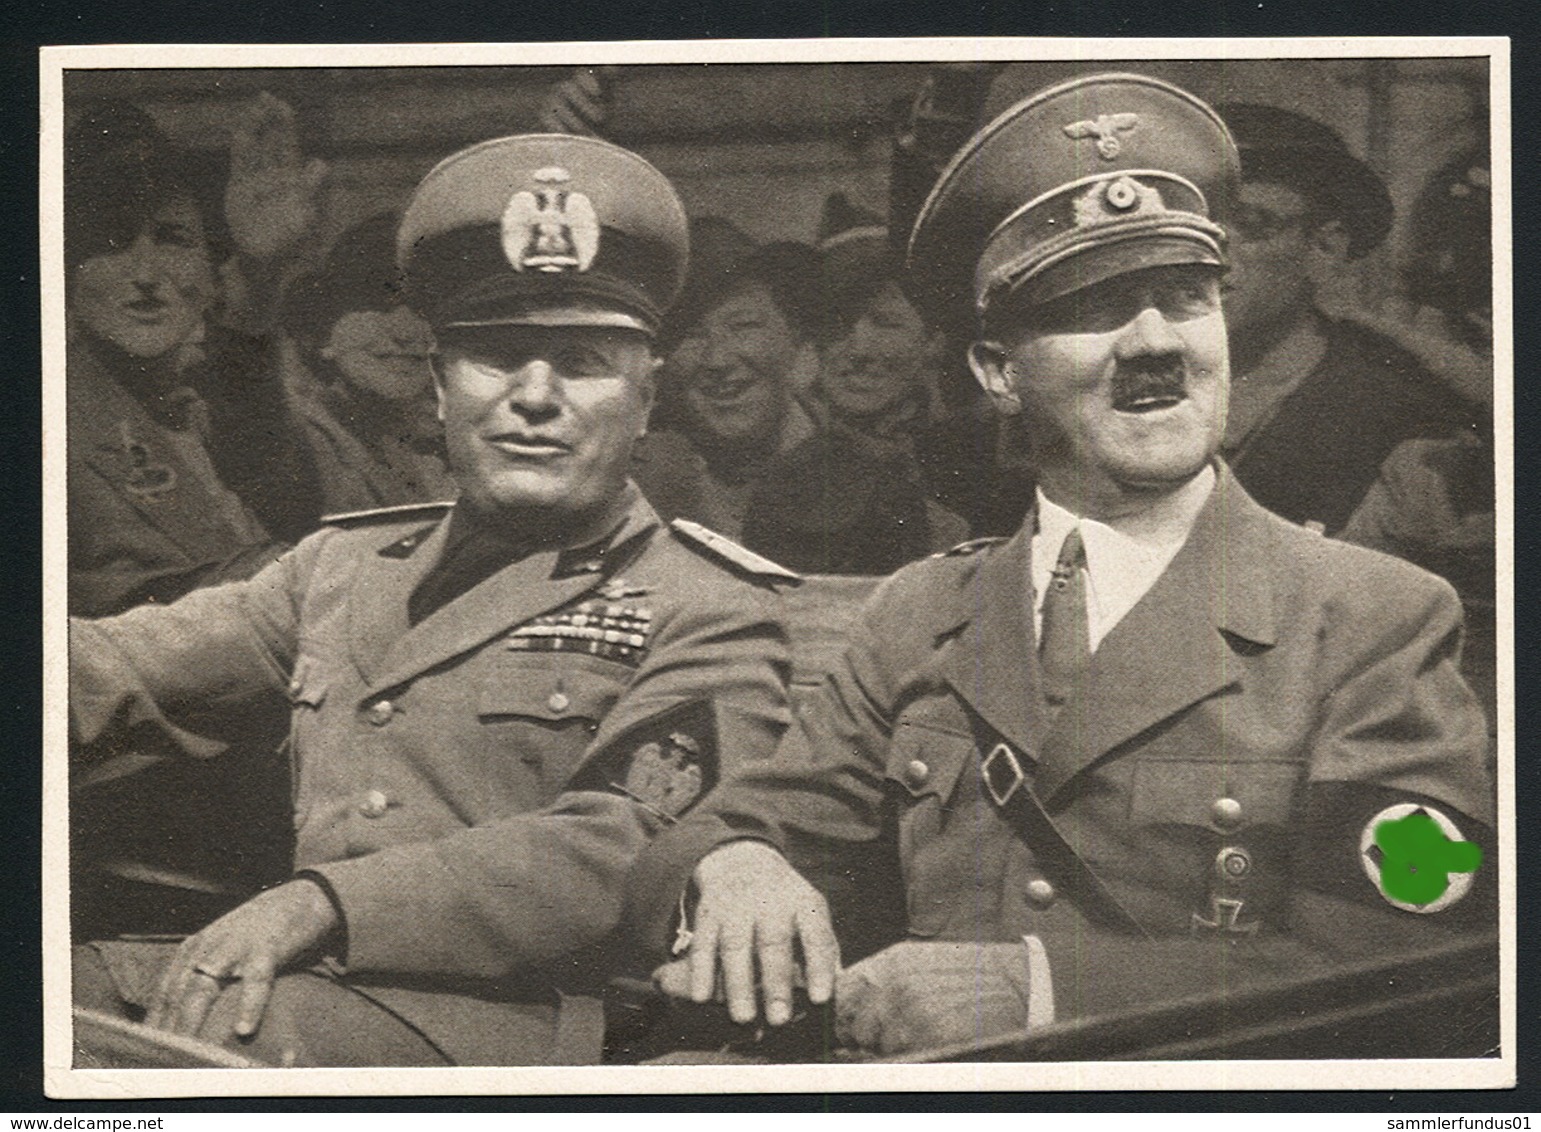 AK/CP Hitler Mussolini  Duce  Propaganda  Nazi  Ungel/uncirc. 1941    Erhaltung/Cond. 2-  Nr. 00573 - Weltkrieg 1939-45